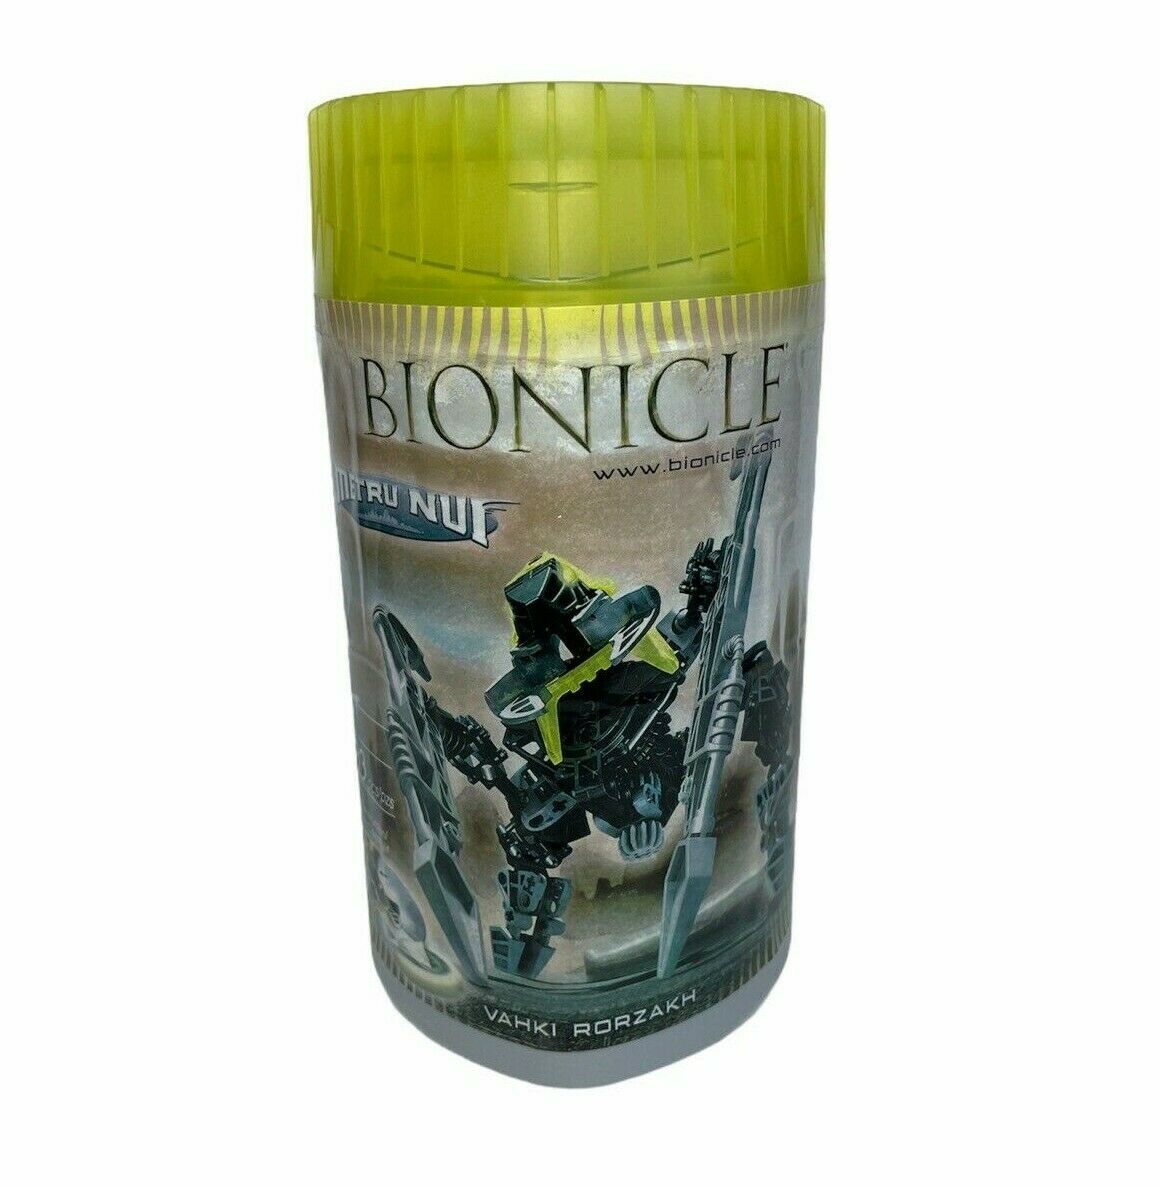 Bionicle LEGO Set 8618 -Vahki Rorzakh